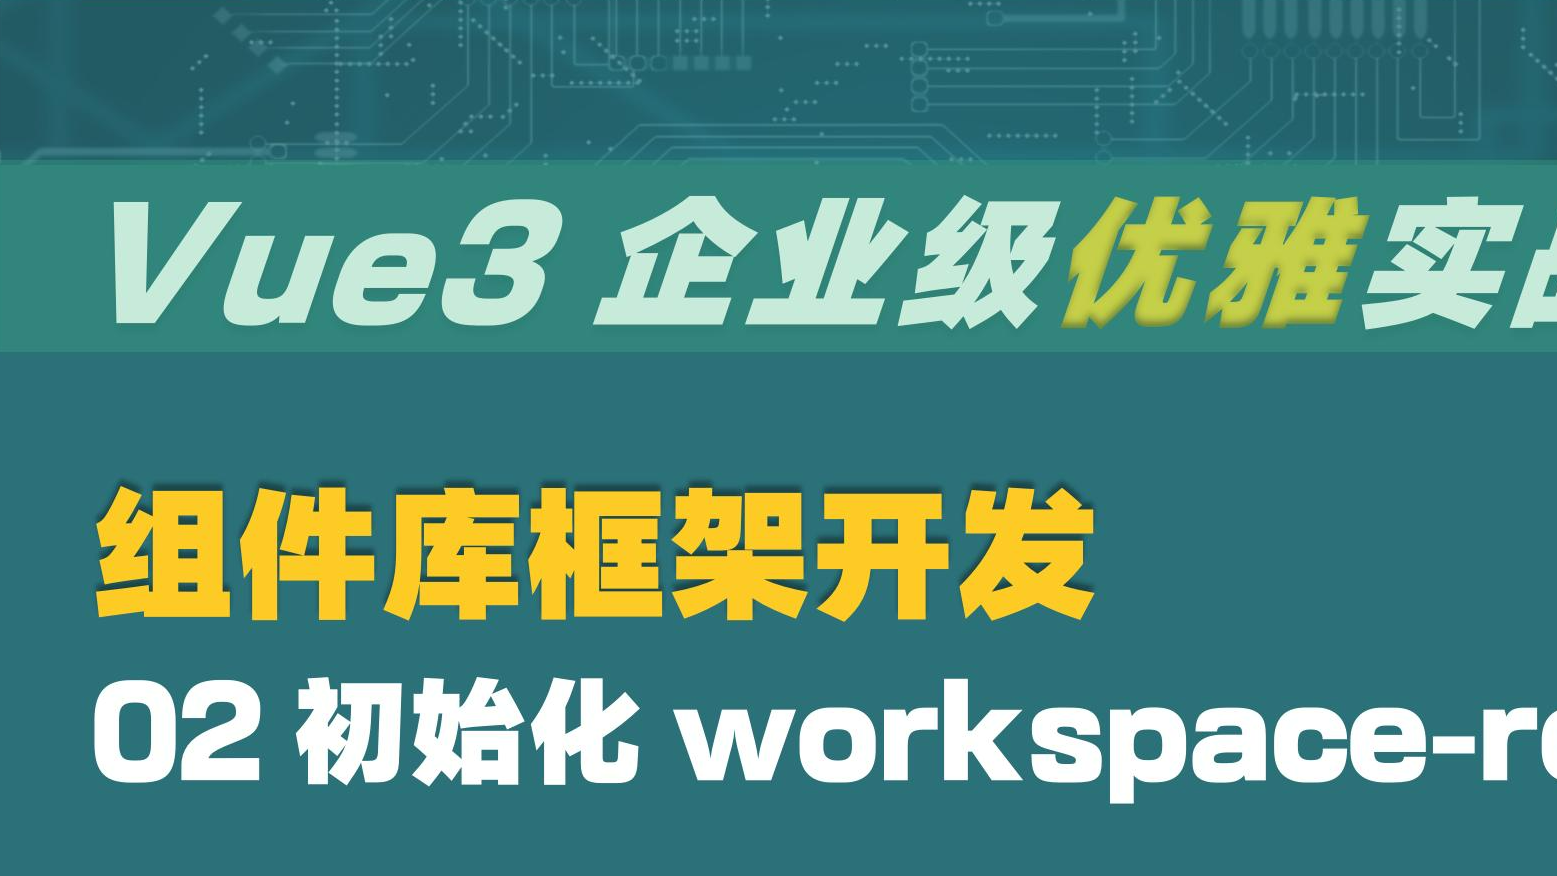  Vue3 企业级优雅实战 - 组件库框架 - 2 初始化 workspace-root